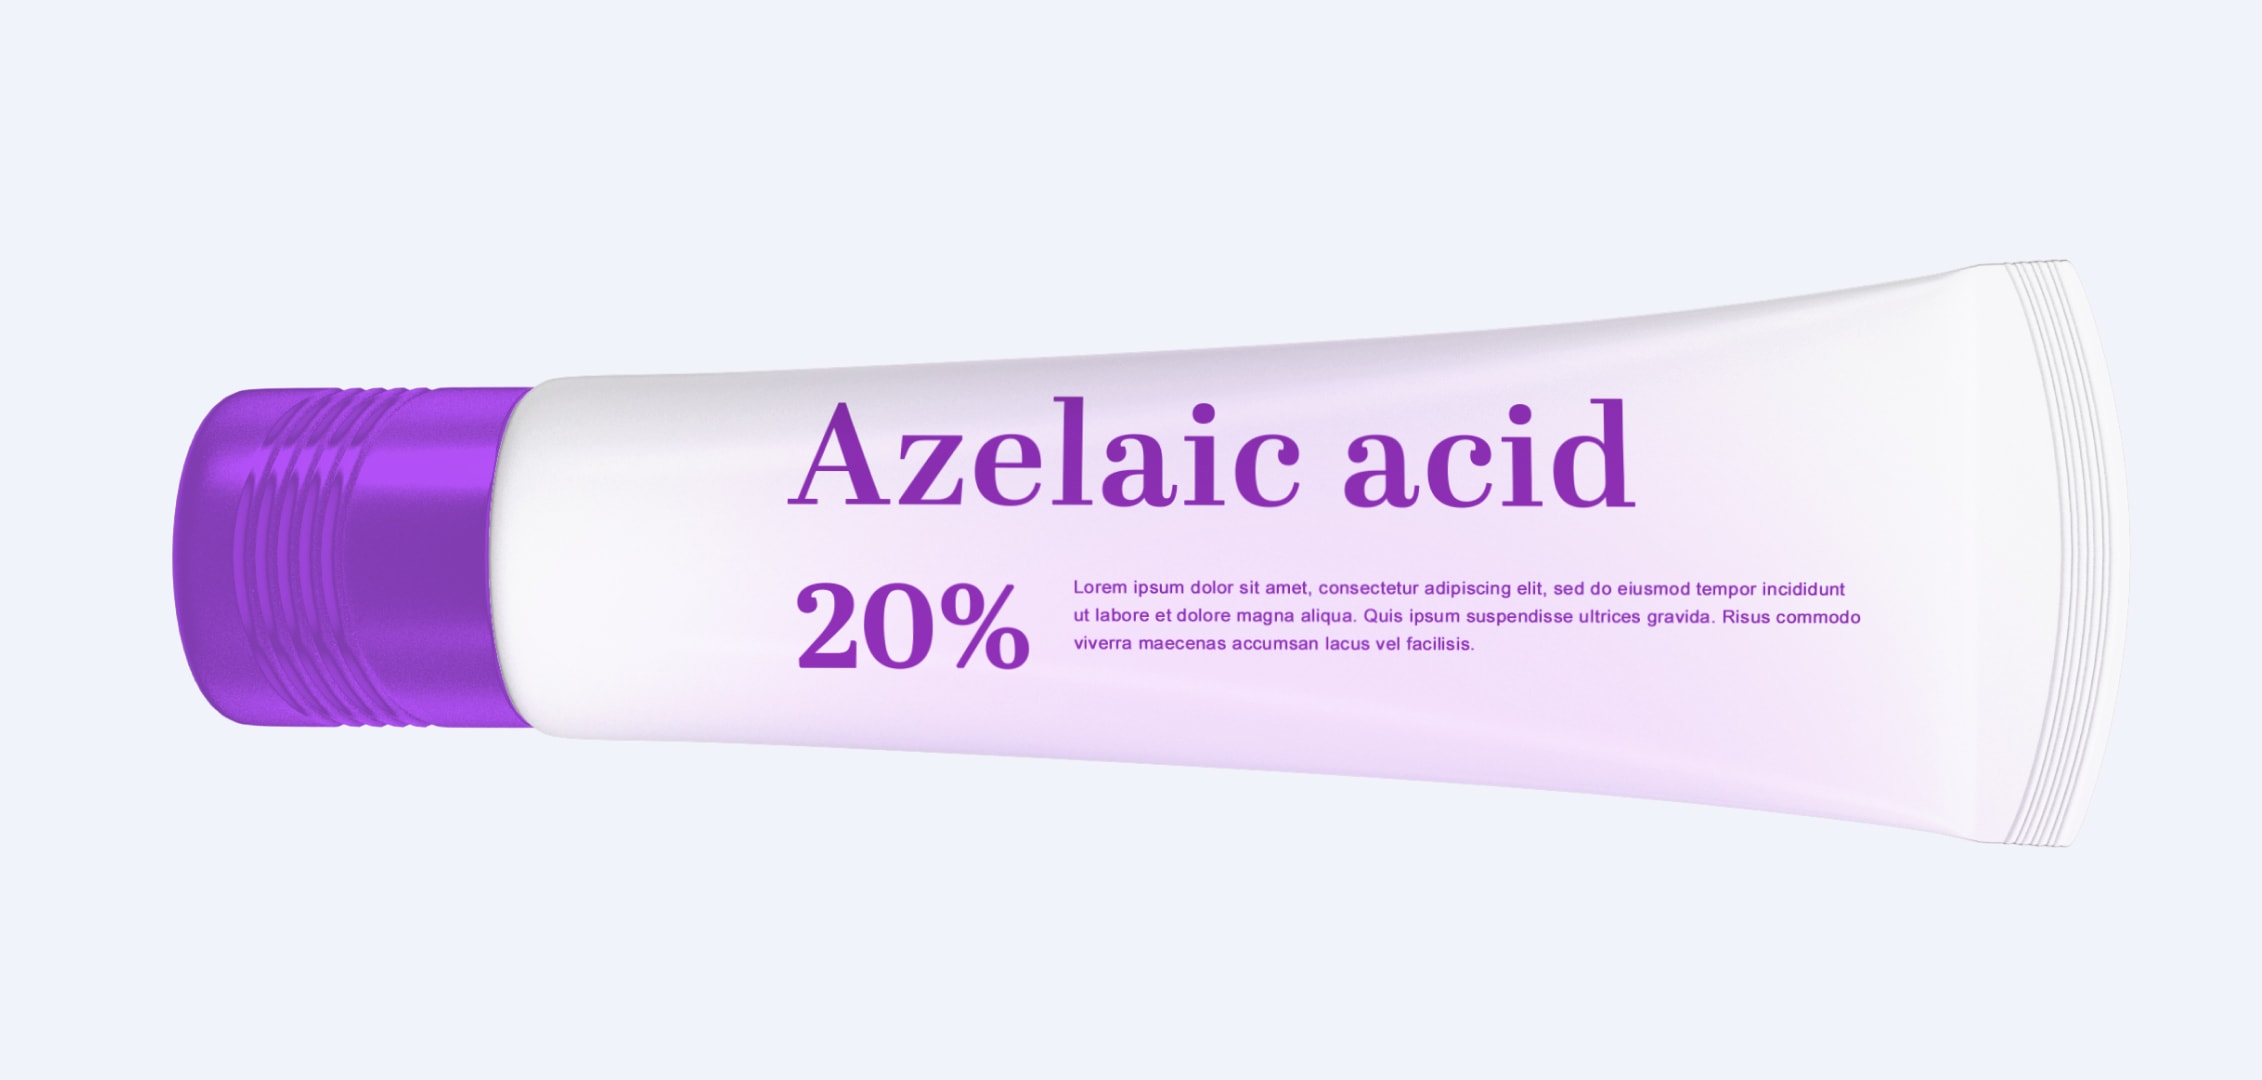 azelaic acid drug